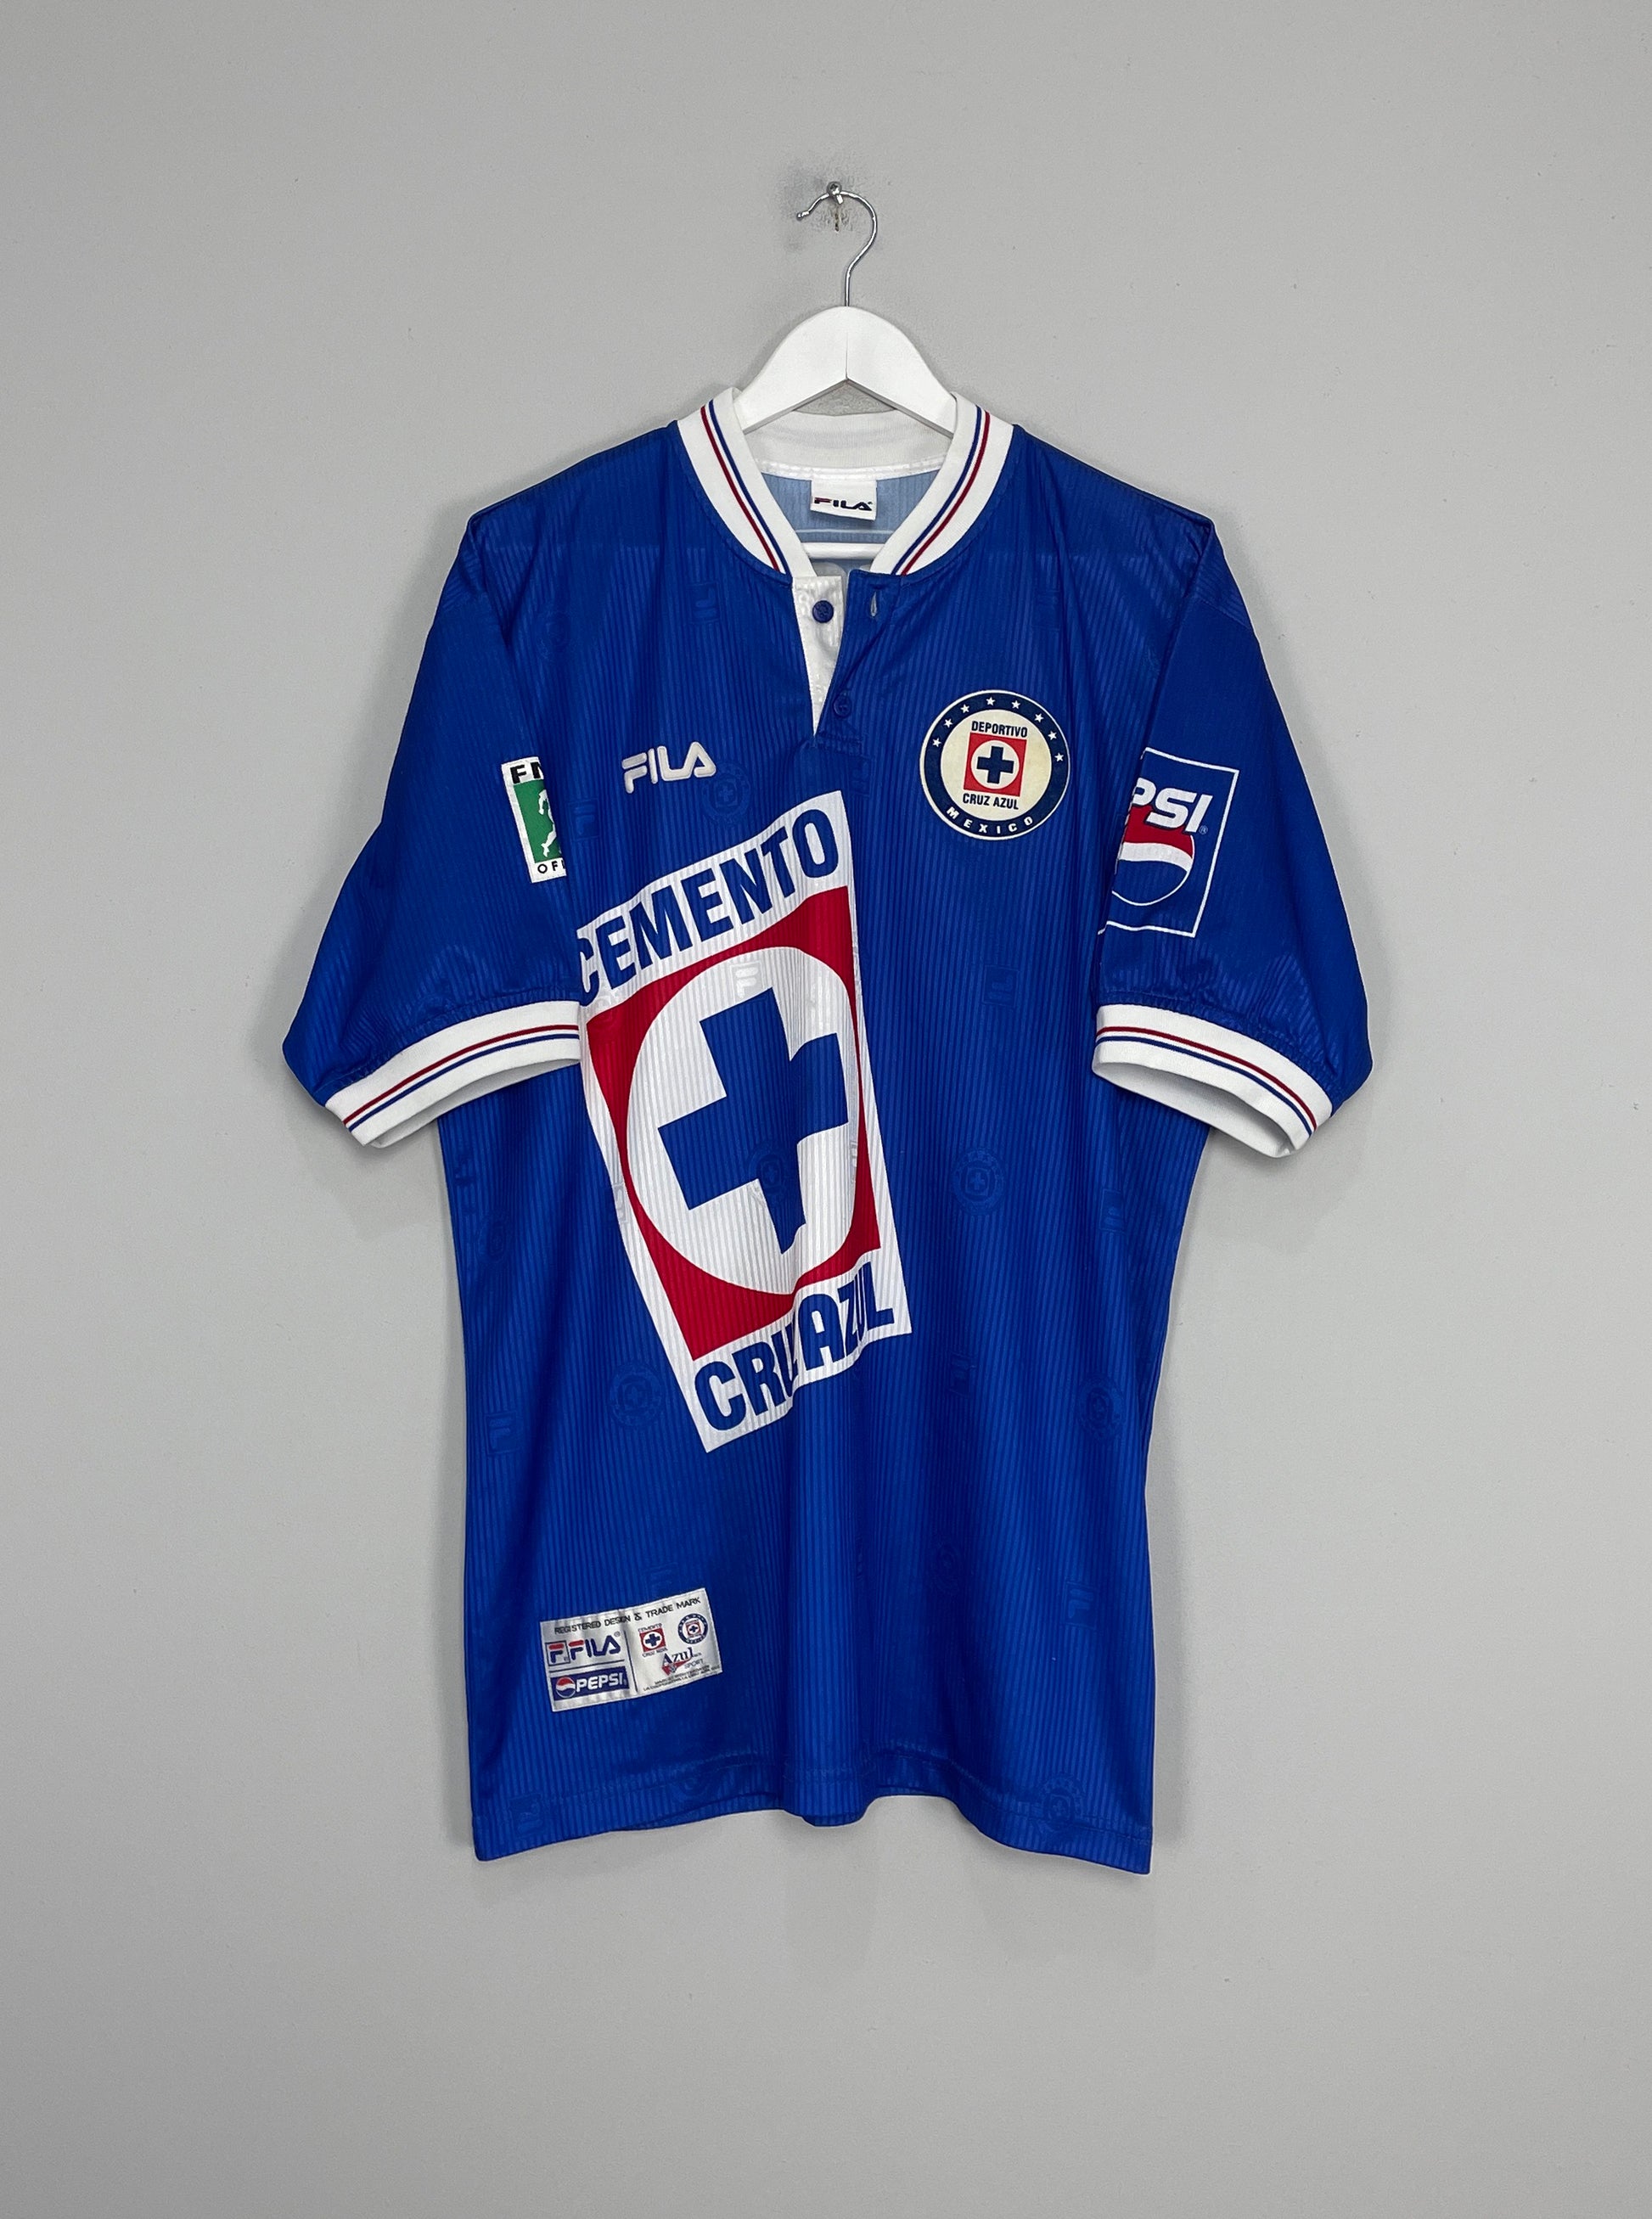 Image of the Cruz Azul shirt from the 1998/99 season